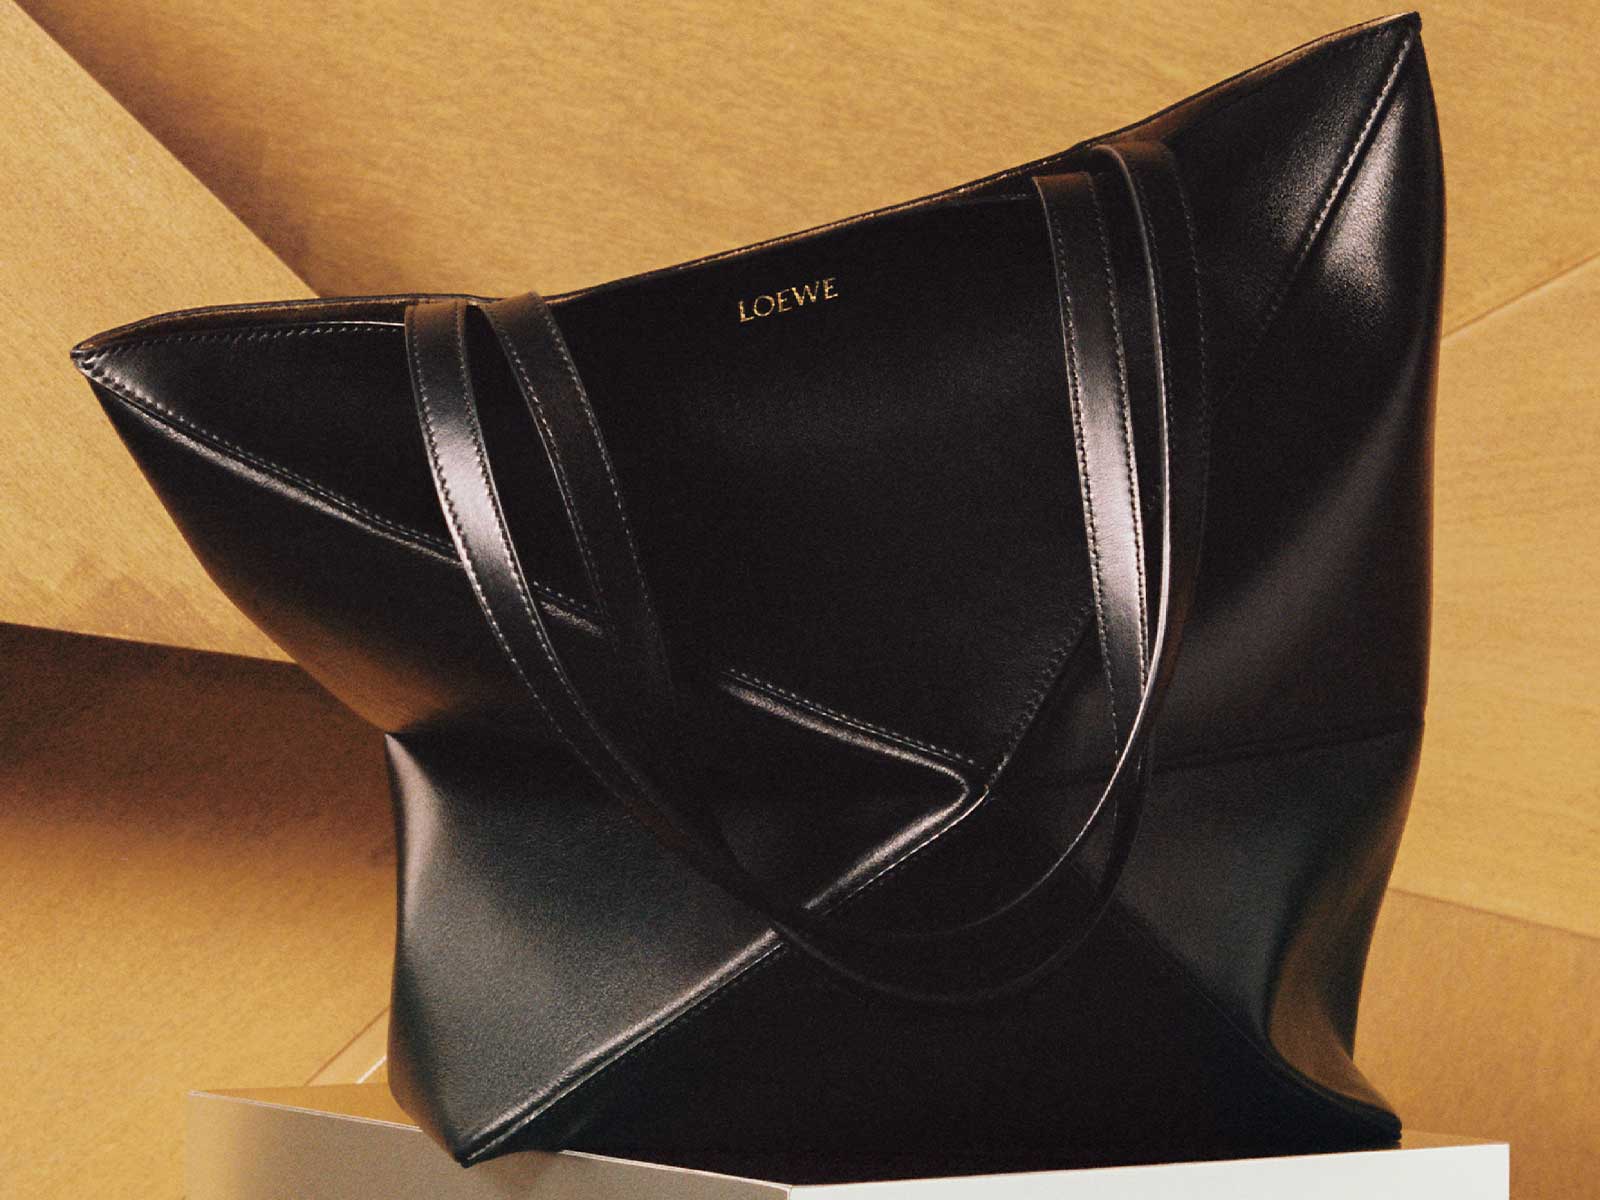 Puzzle Fold Mini Leather Tote Bag in Orange - Loewe